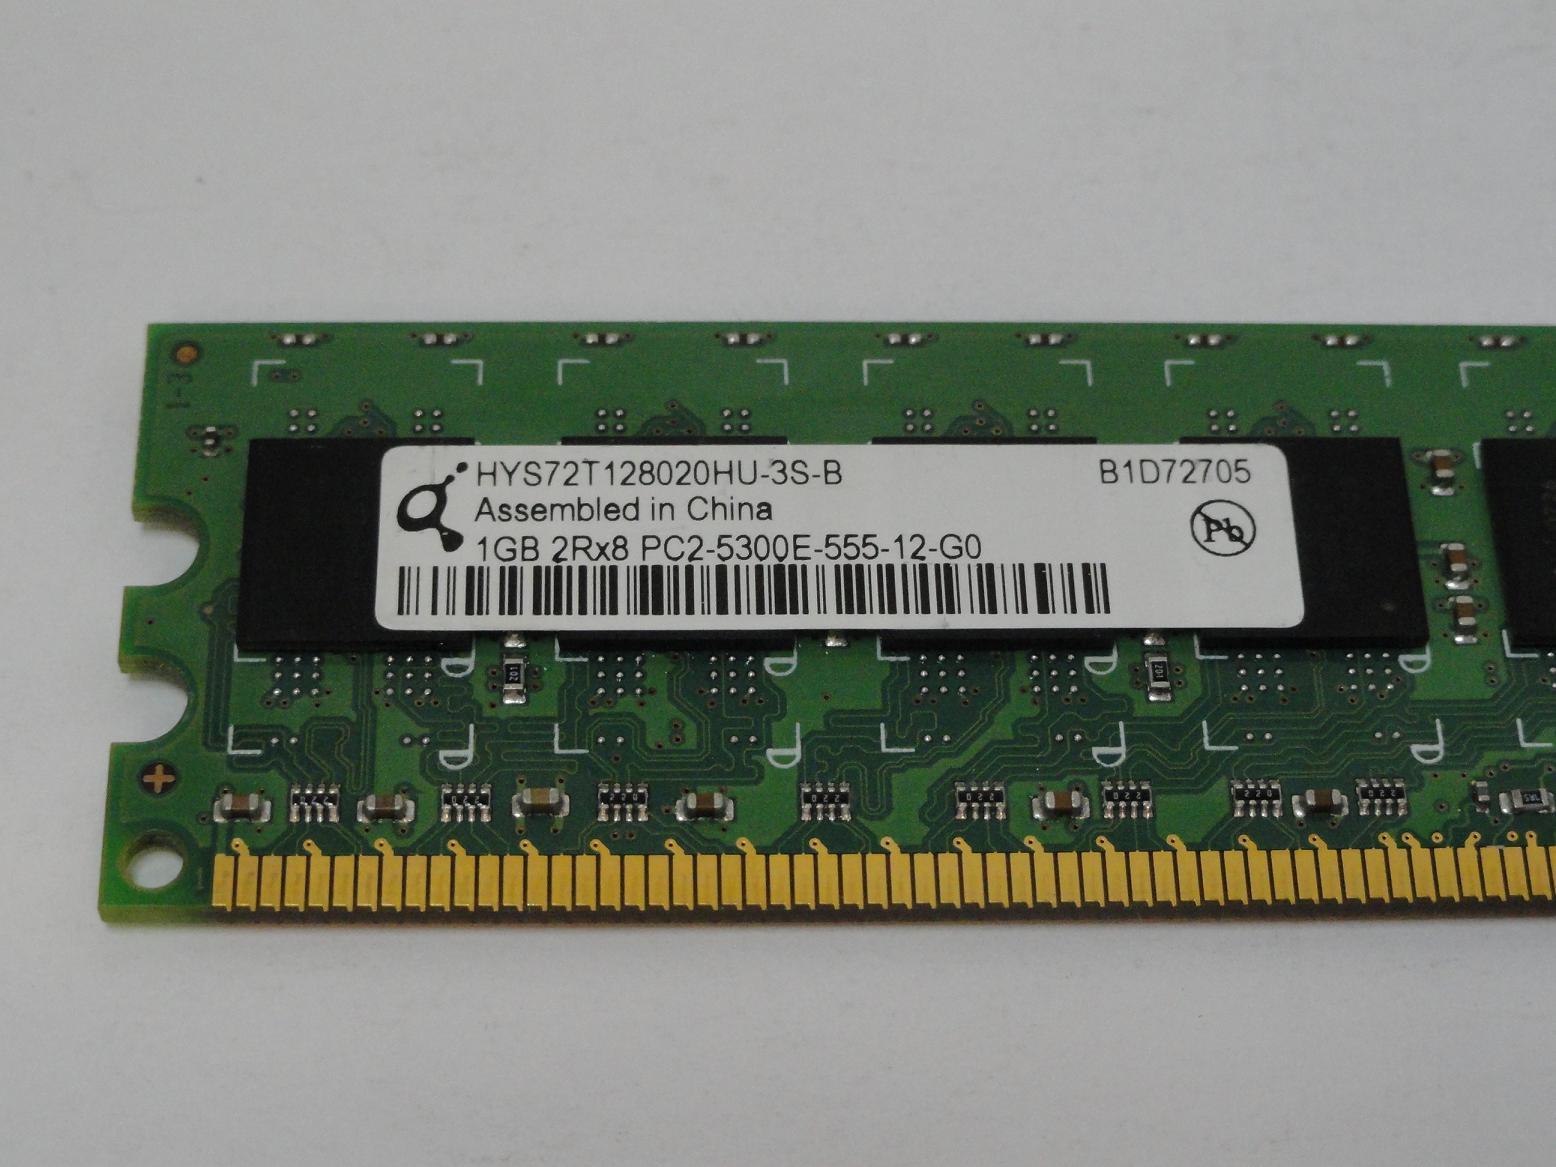 PR04545_PC2-5300E-555-12-G0_Qimonda Sun 1GB PC2-5300 DDR2-667MHz DIMM RAM - Image3